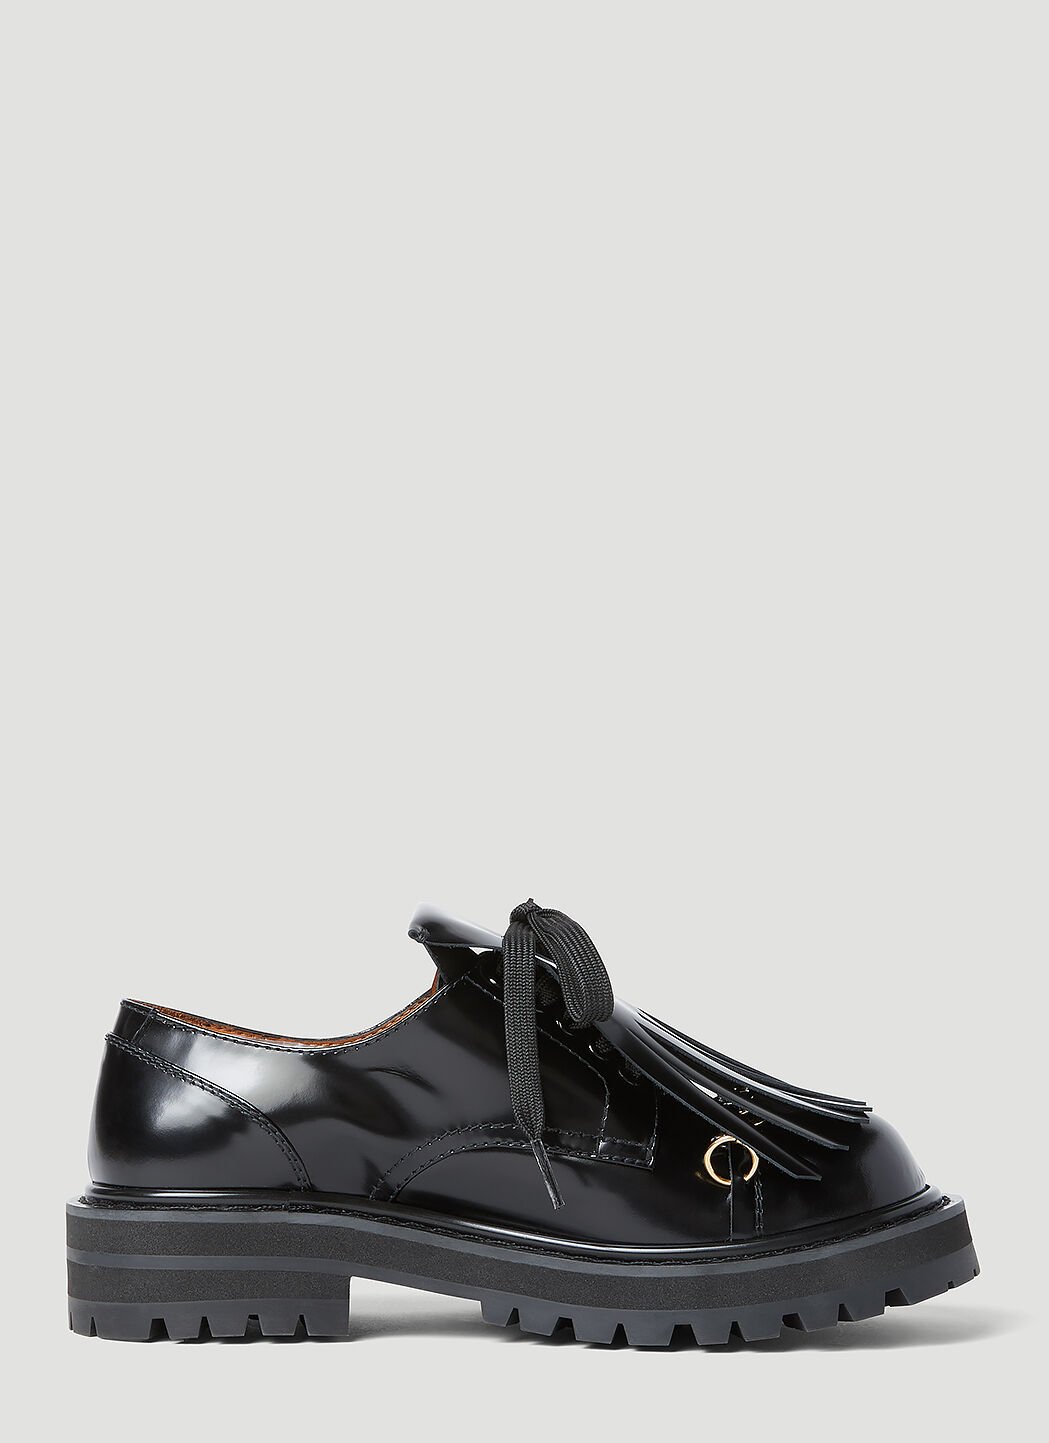 Vivienne Westwood Dada Derby Shoes Black vvw0255059